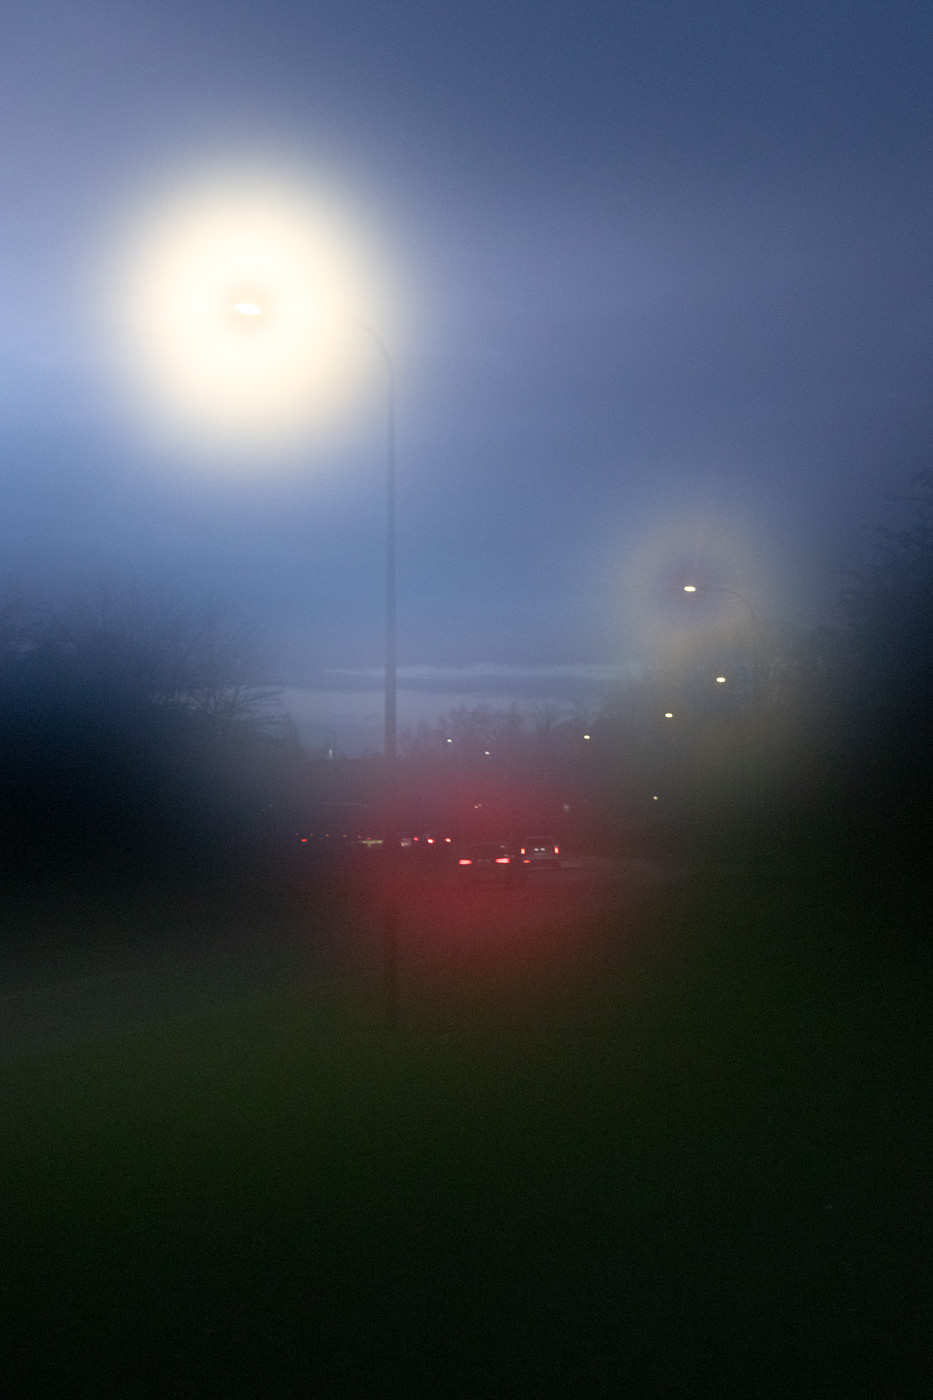 Blurred photo of cars on road under streetlights